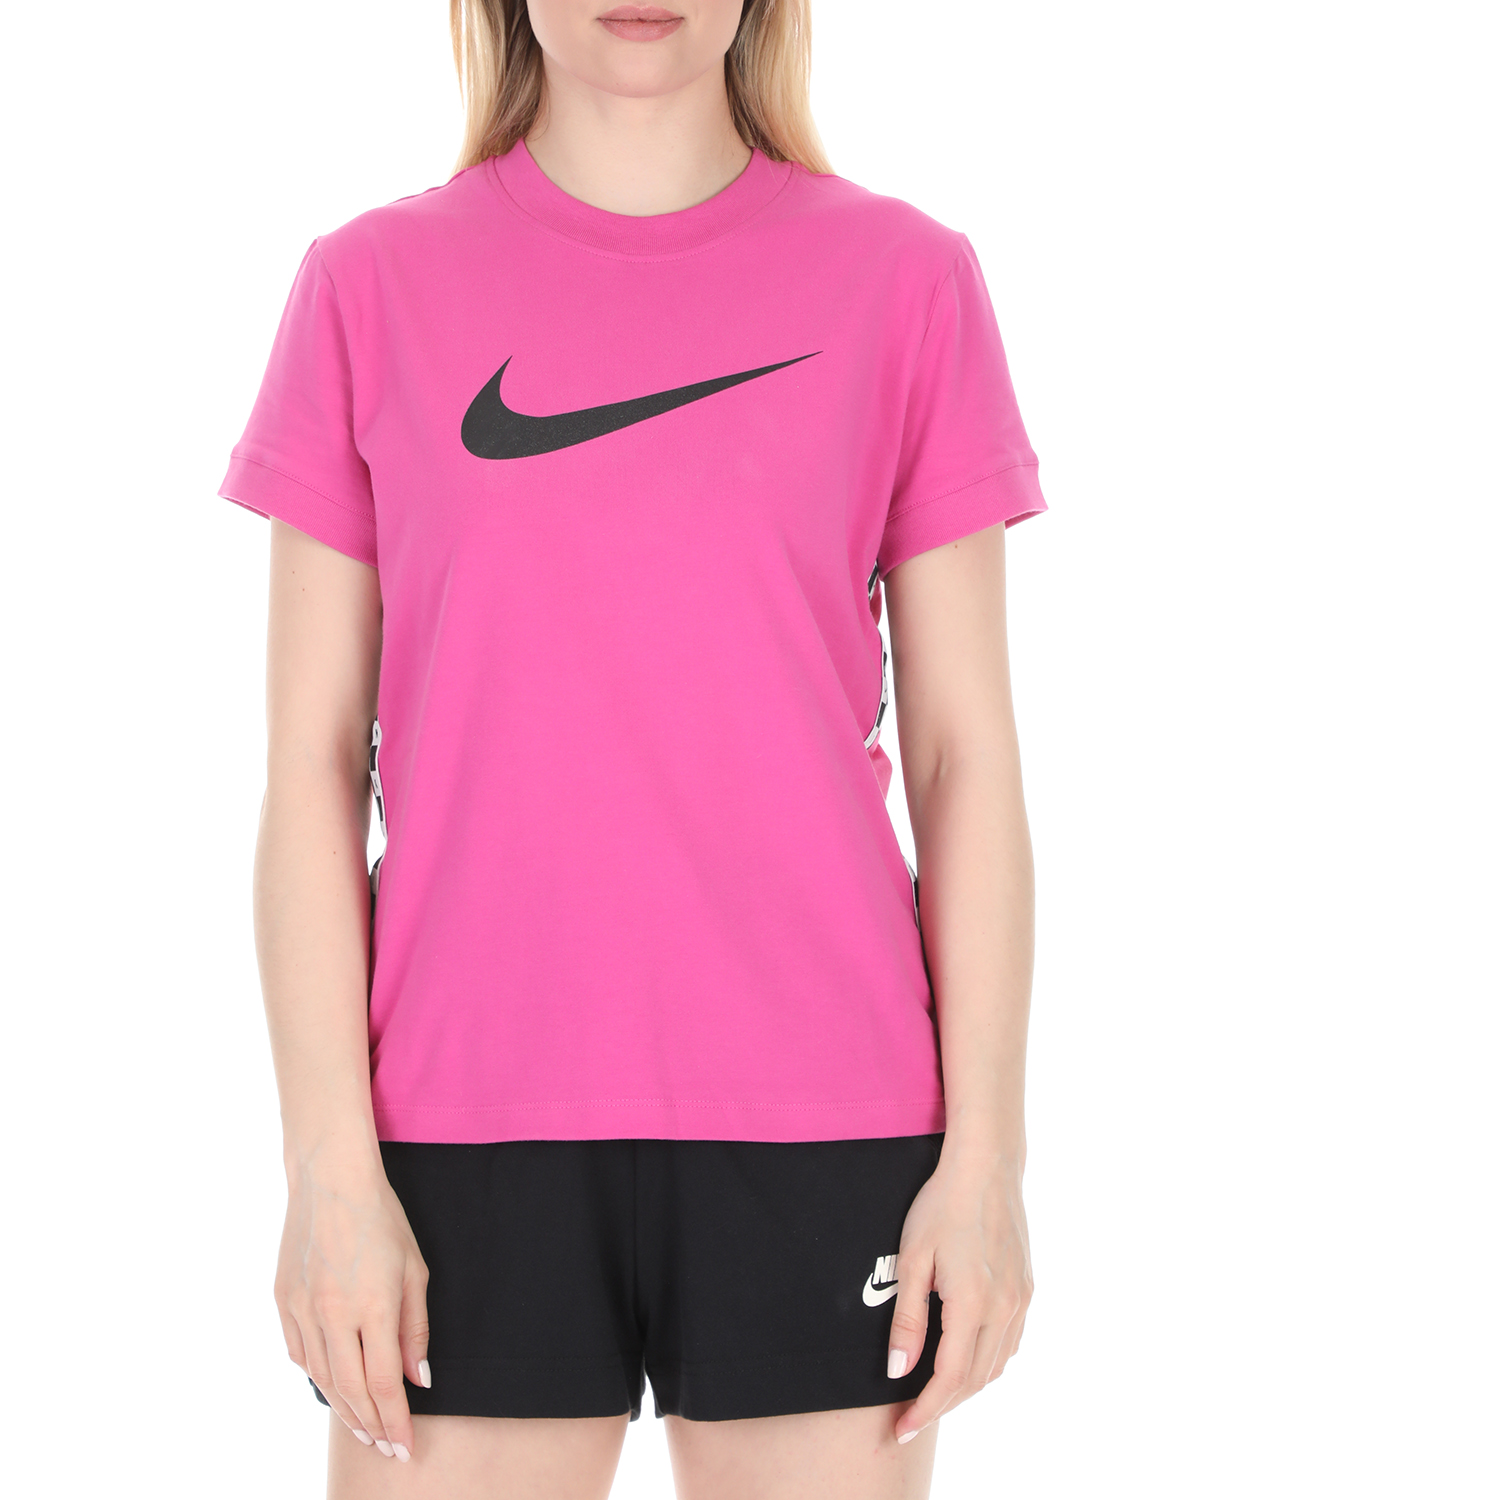 NIKE - Γυναικείο t-shirt NIKE Sportswear φούξια Γυναικεία/Ρούχα/Αθλητικά/T-shirt-Τοπ